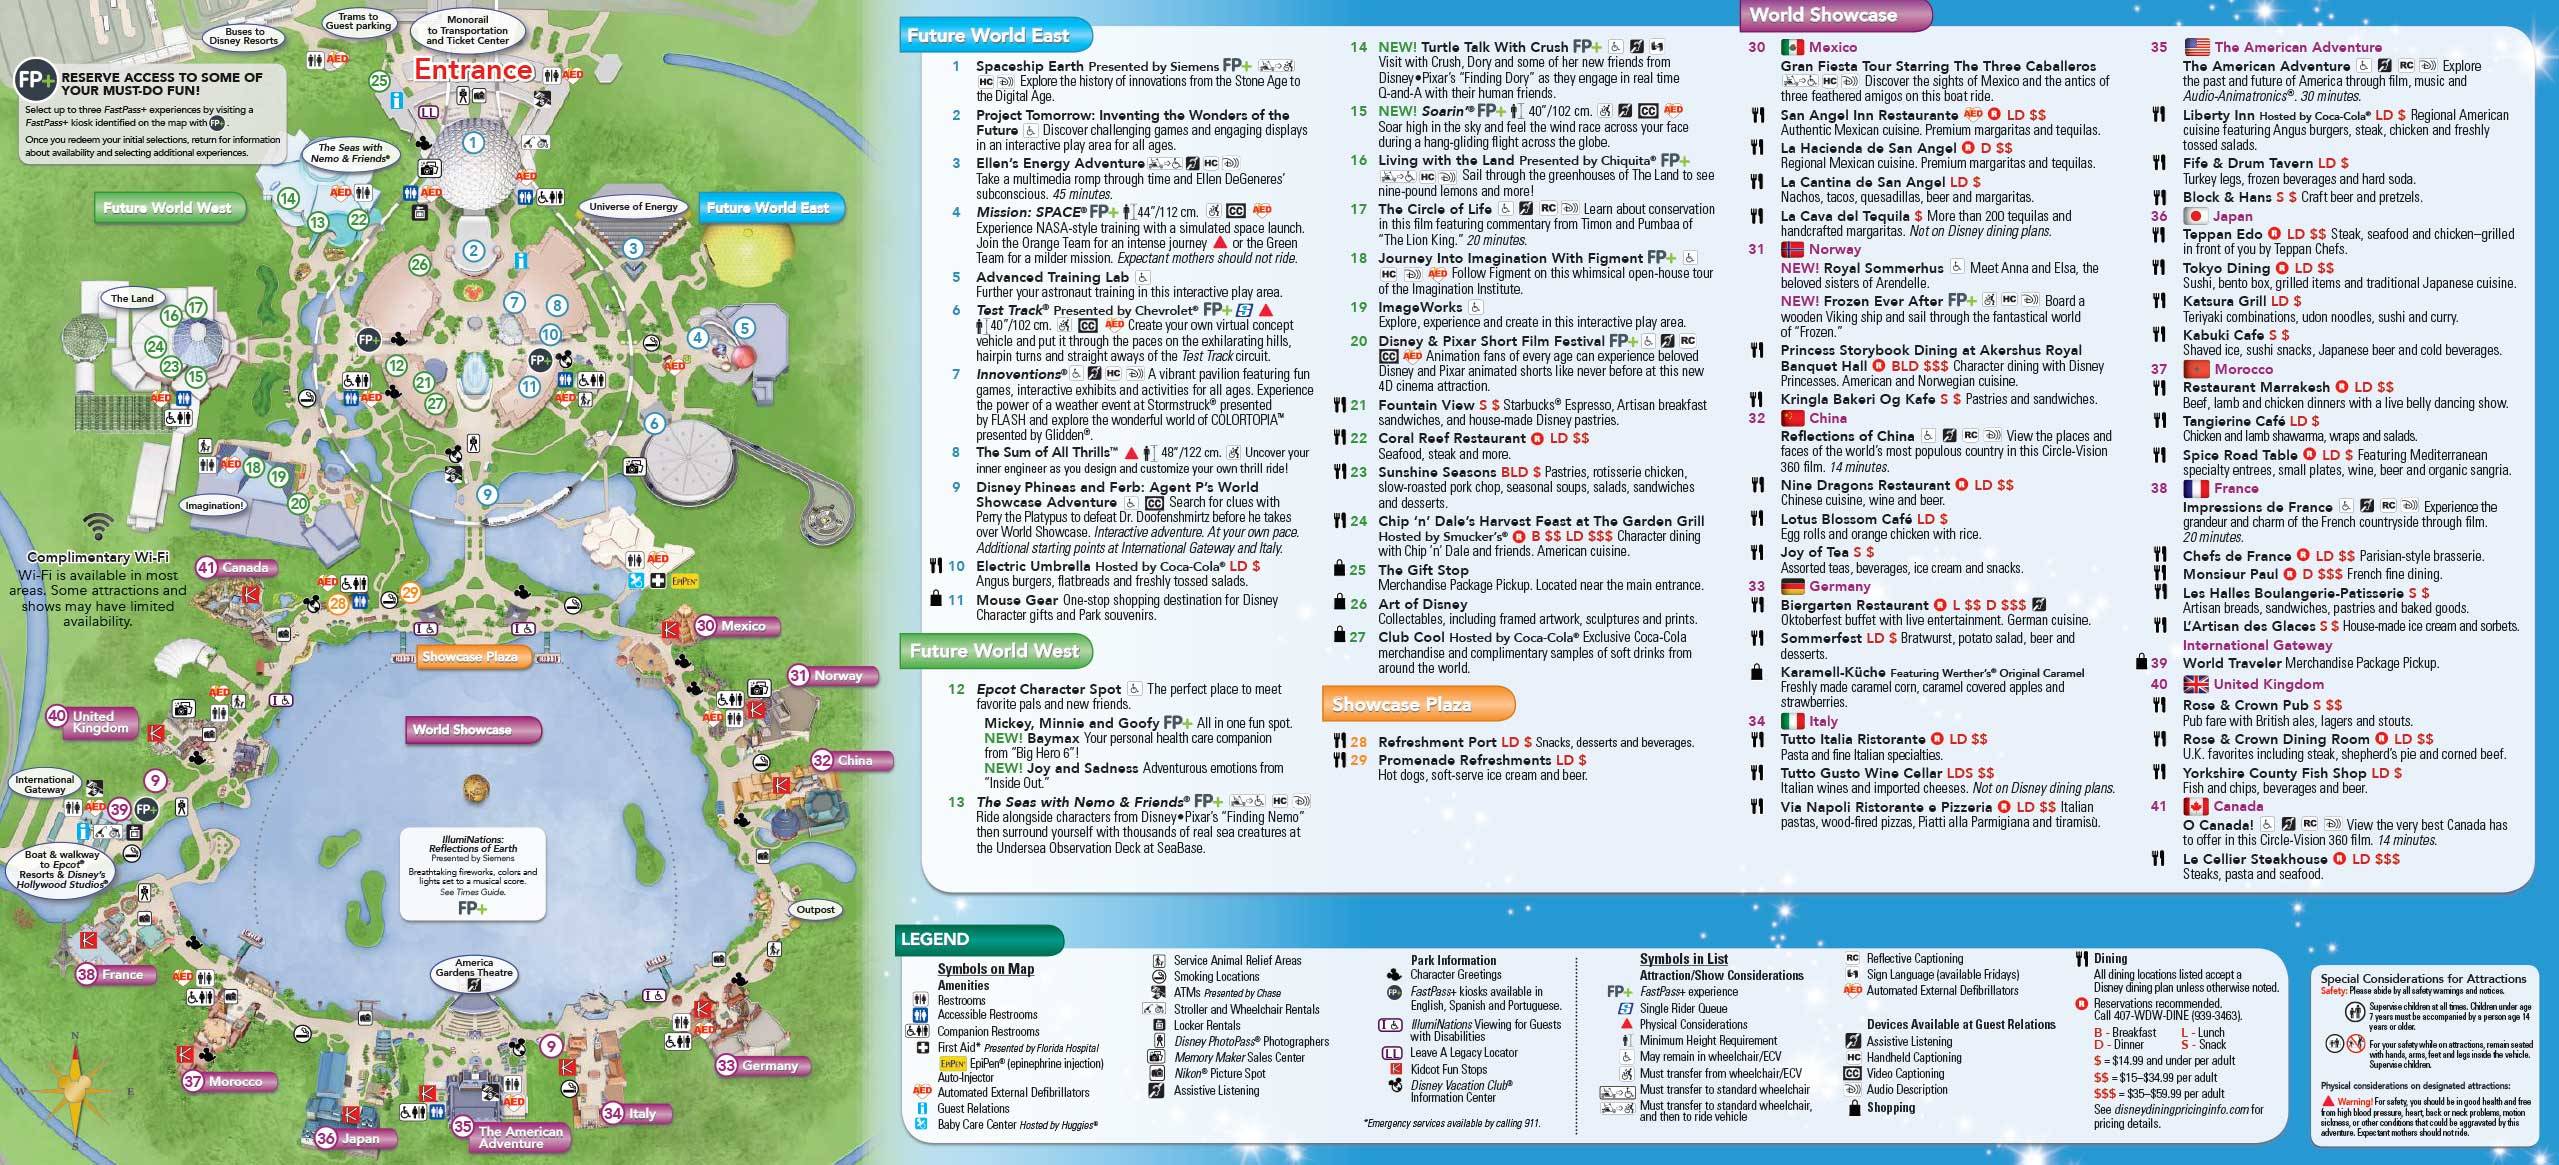 June 2016 Walt Disney World Park Maps - Photo 4 of 4